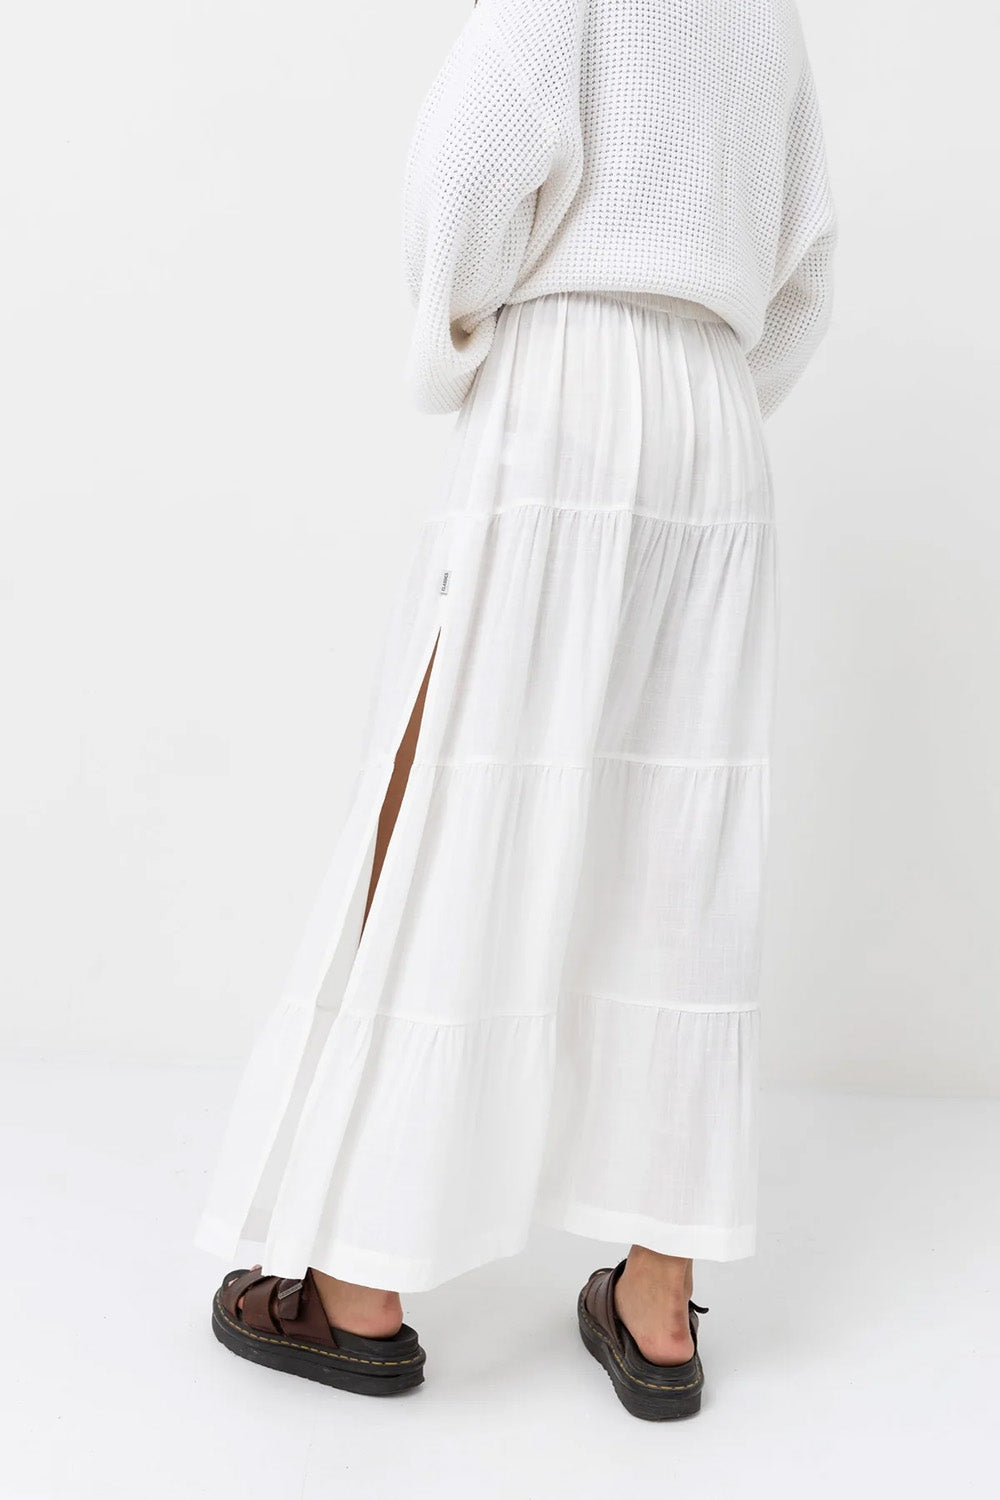 Rhythm - Classic Tiered Maxi Skirt - White - Back